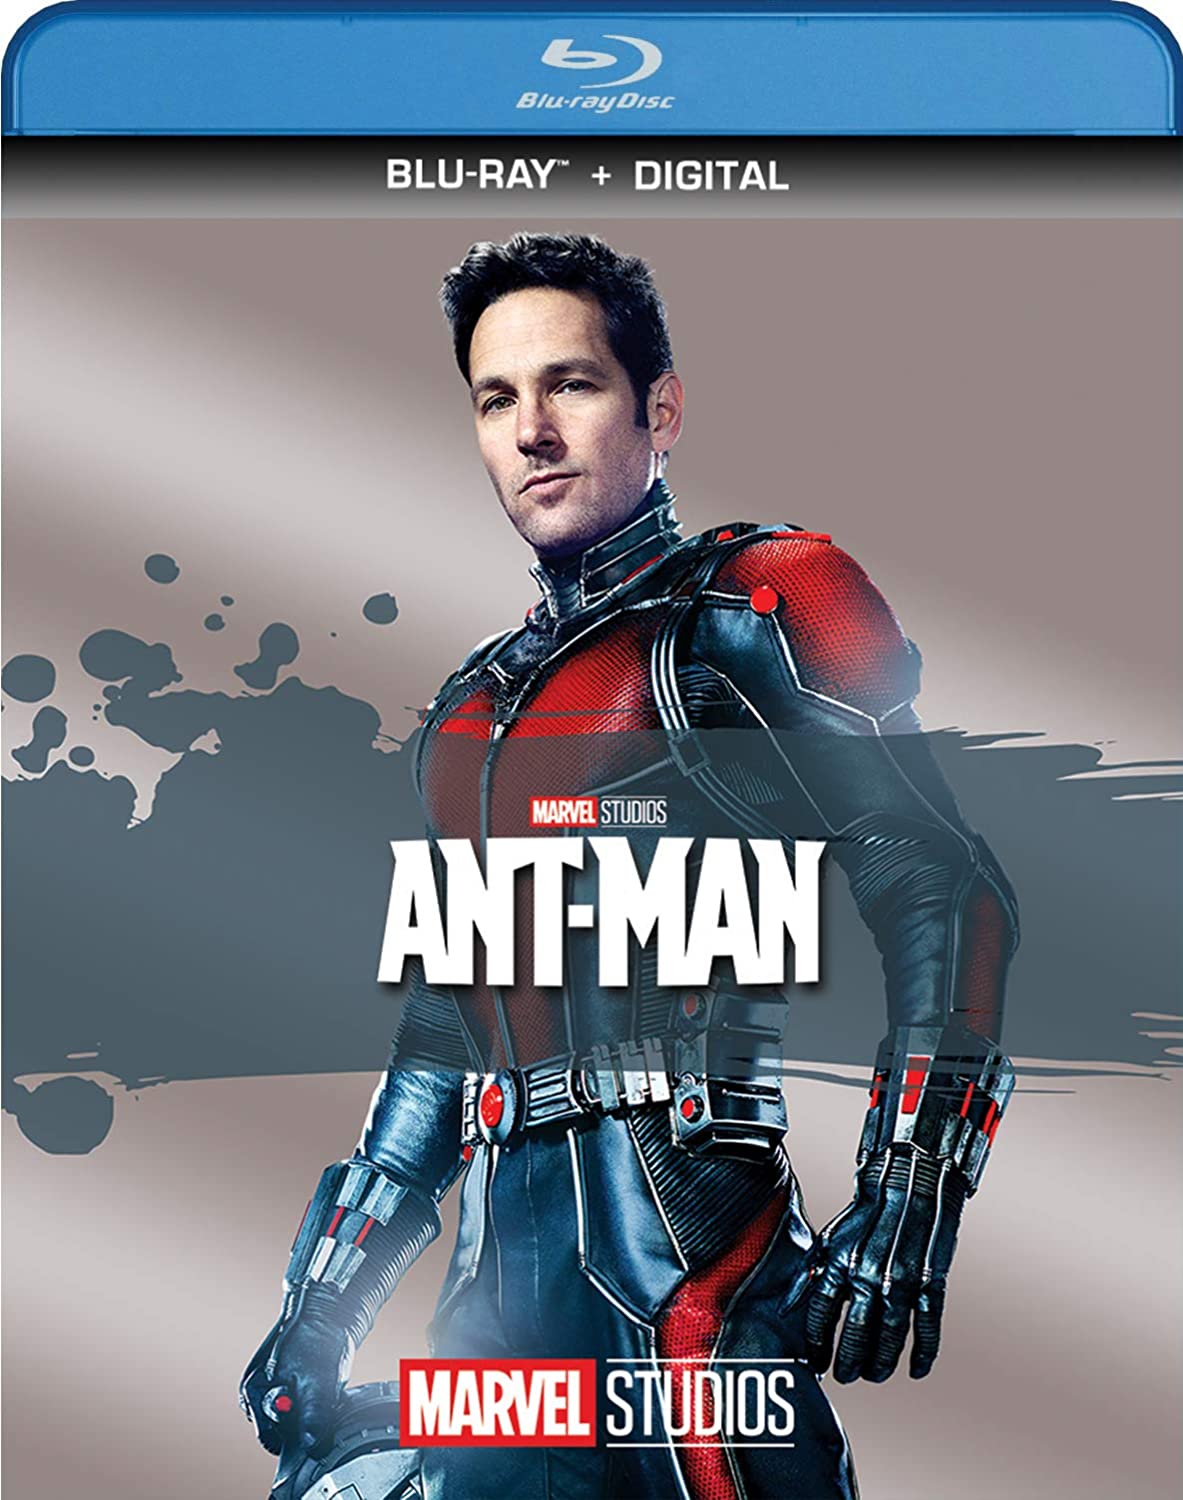 Marvel's Ant-Man (2015) (Blu-Ray + Digital) $7.48 via Amazon